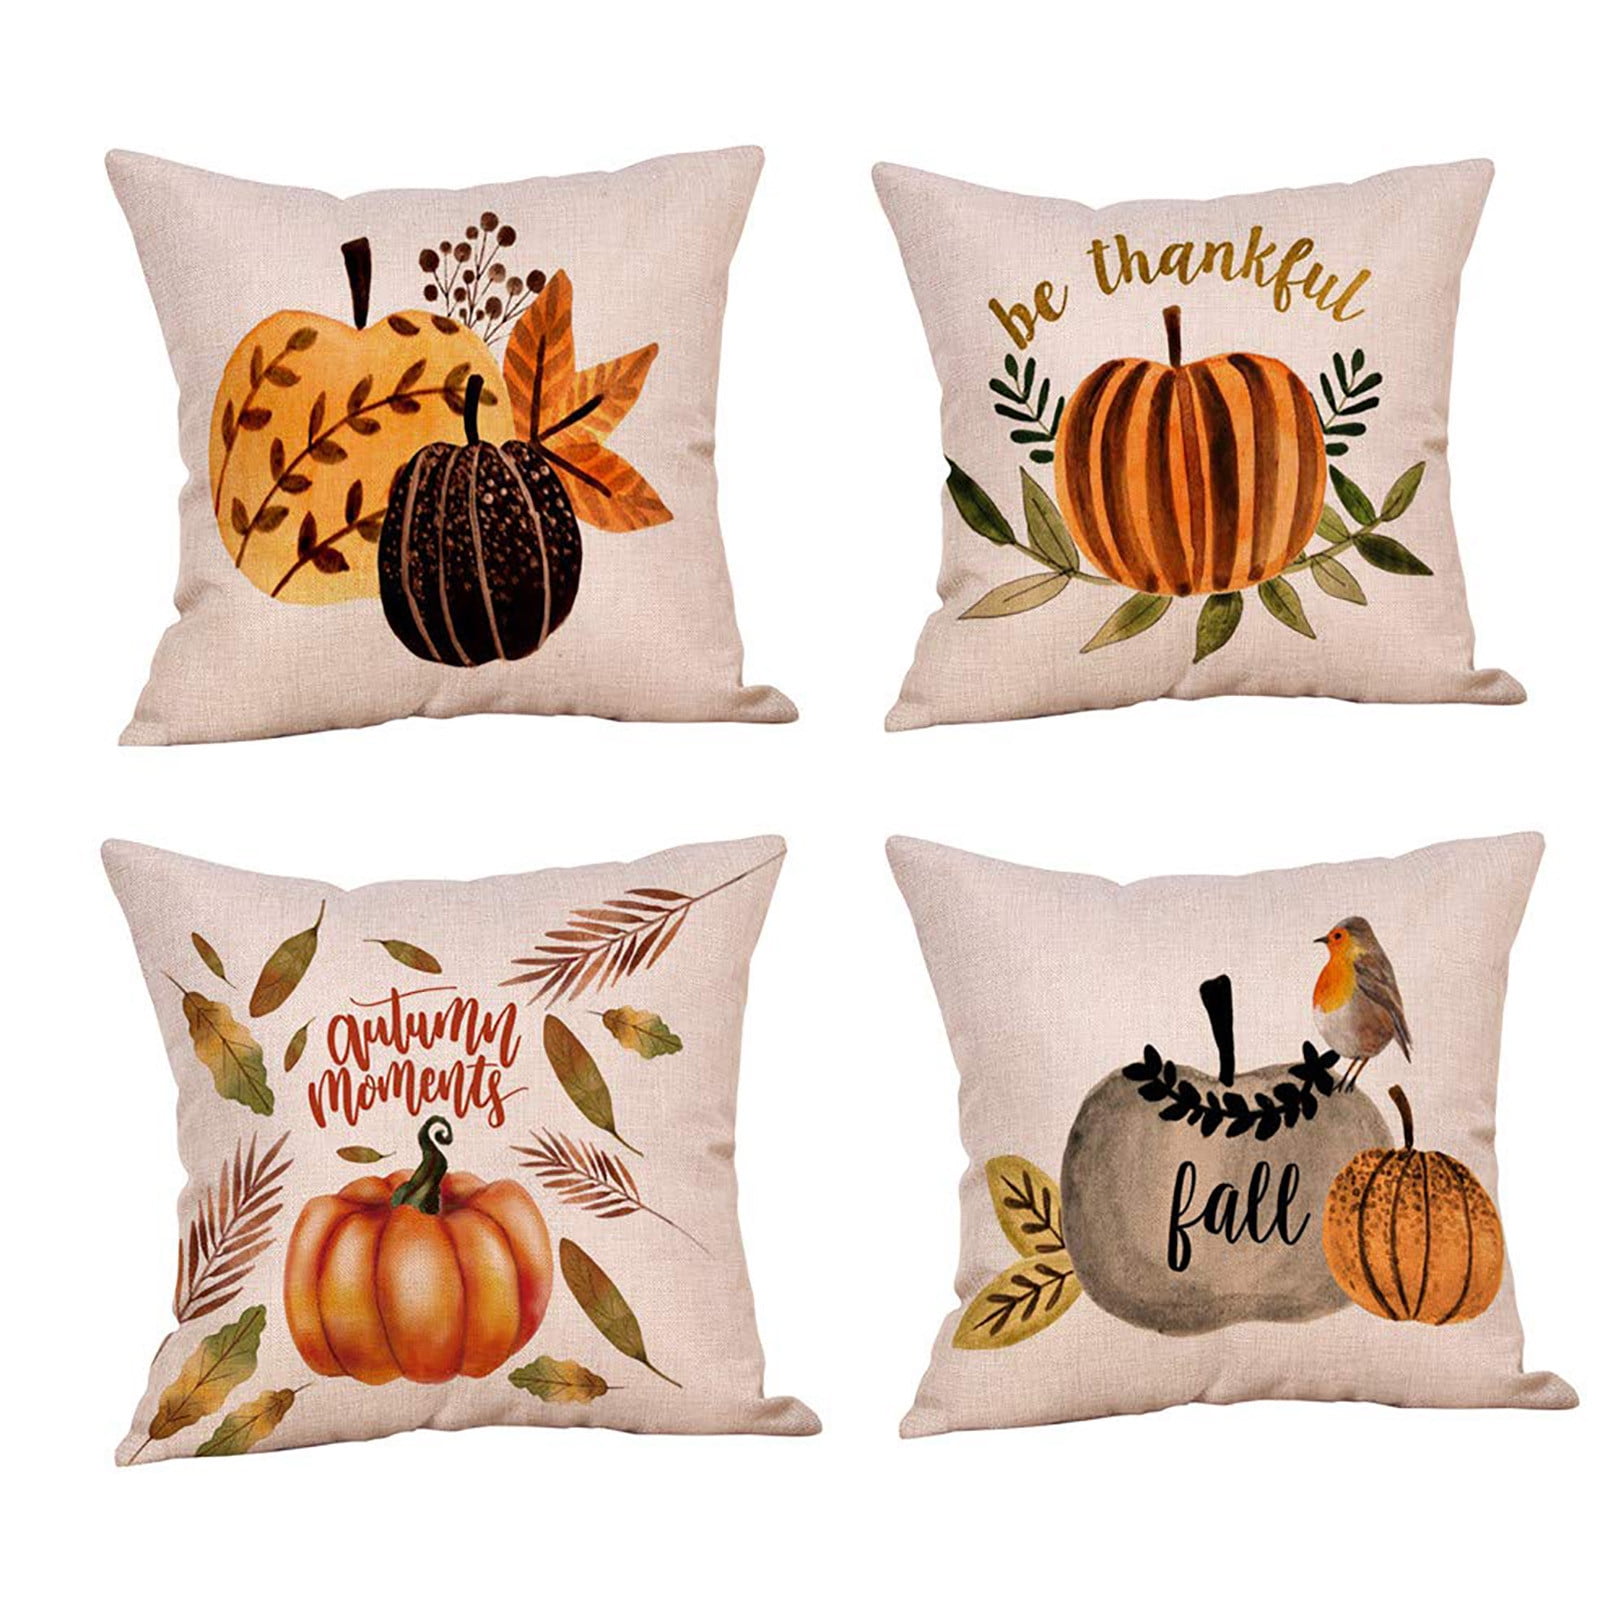 Watercolor Print Throw Pillow Cover Farm Truck Fall Pumpkins Zip 18/"x18/" U Pick